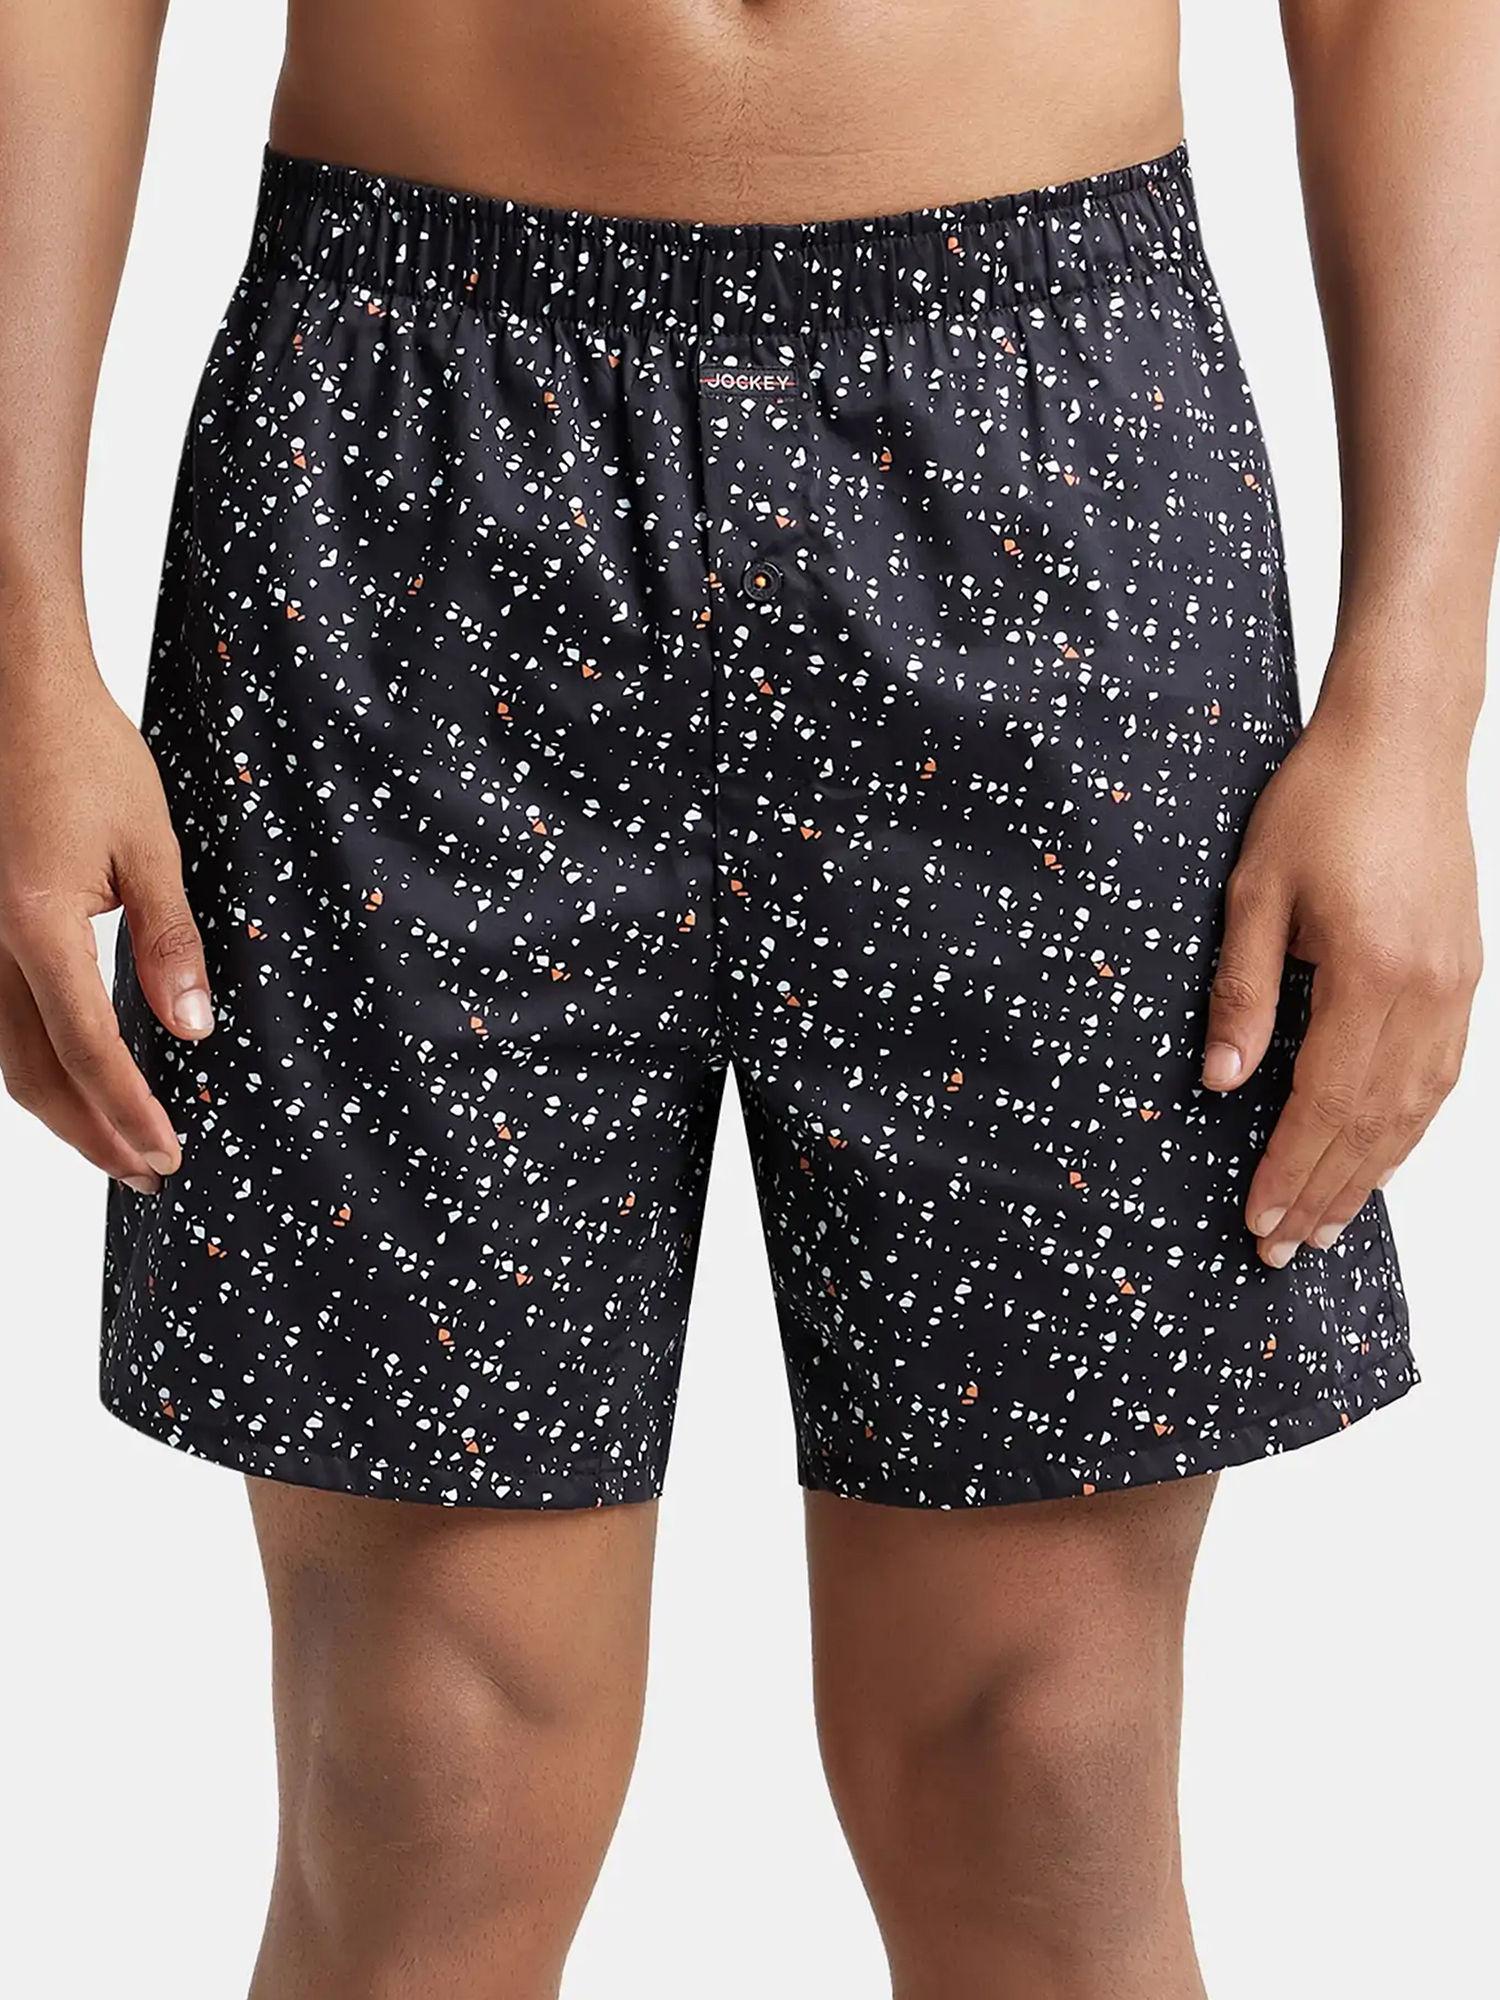 ny07 mens super cotton satin weave printed boxer shorts with side pocket-black